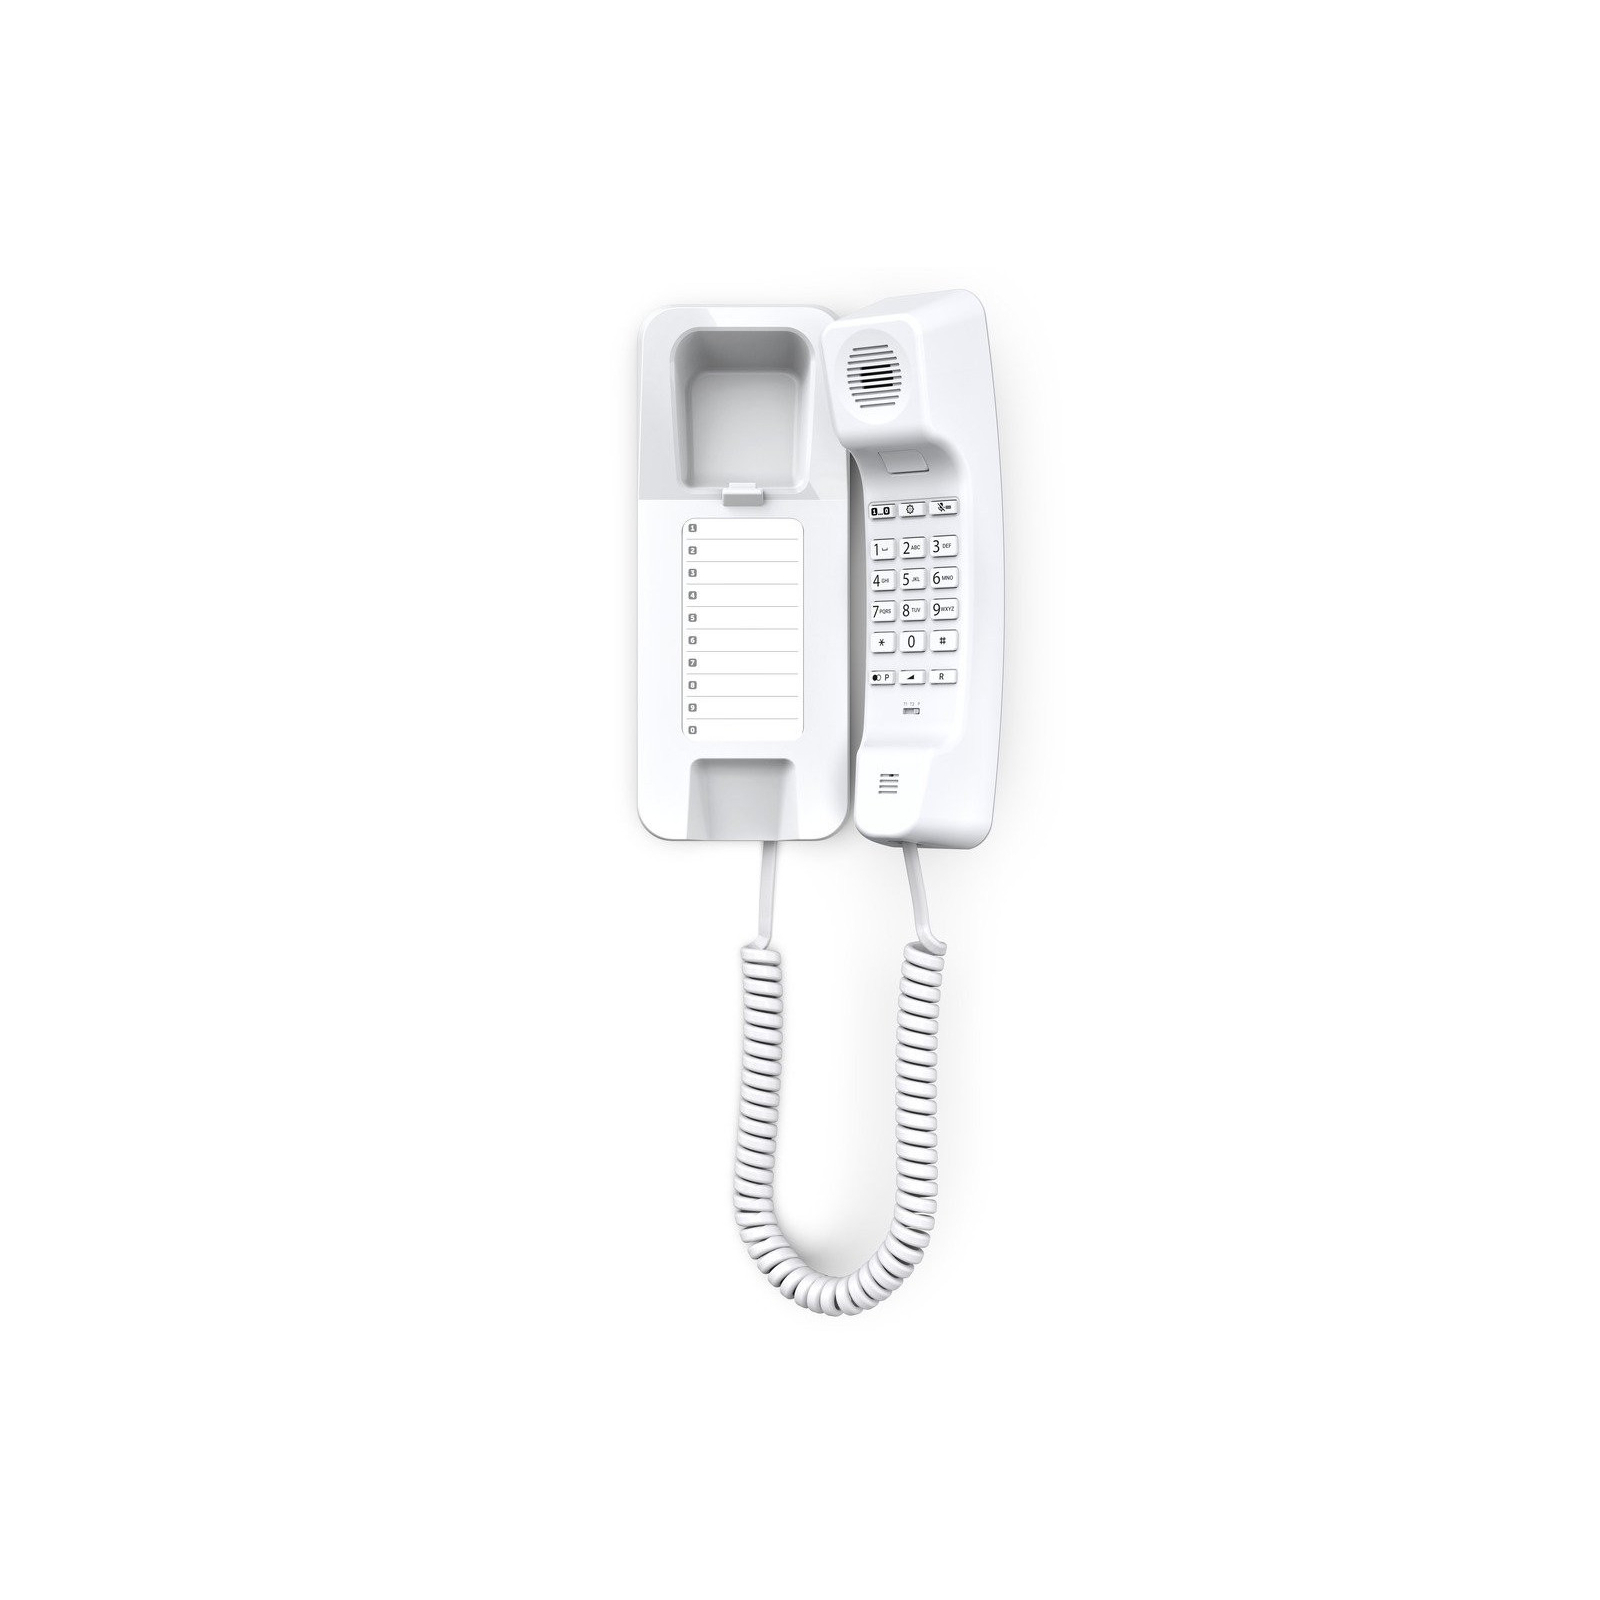 Телефон Gigaset DESK 200 White (S30054H6539S202) изображение 4